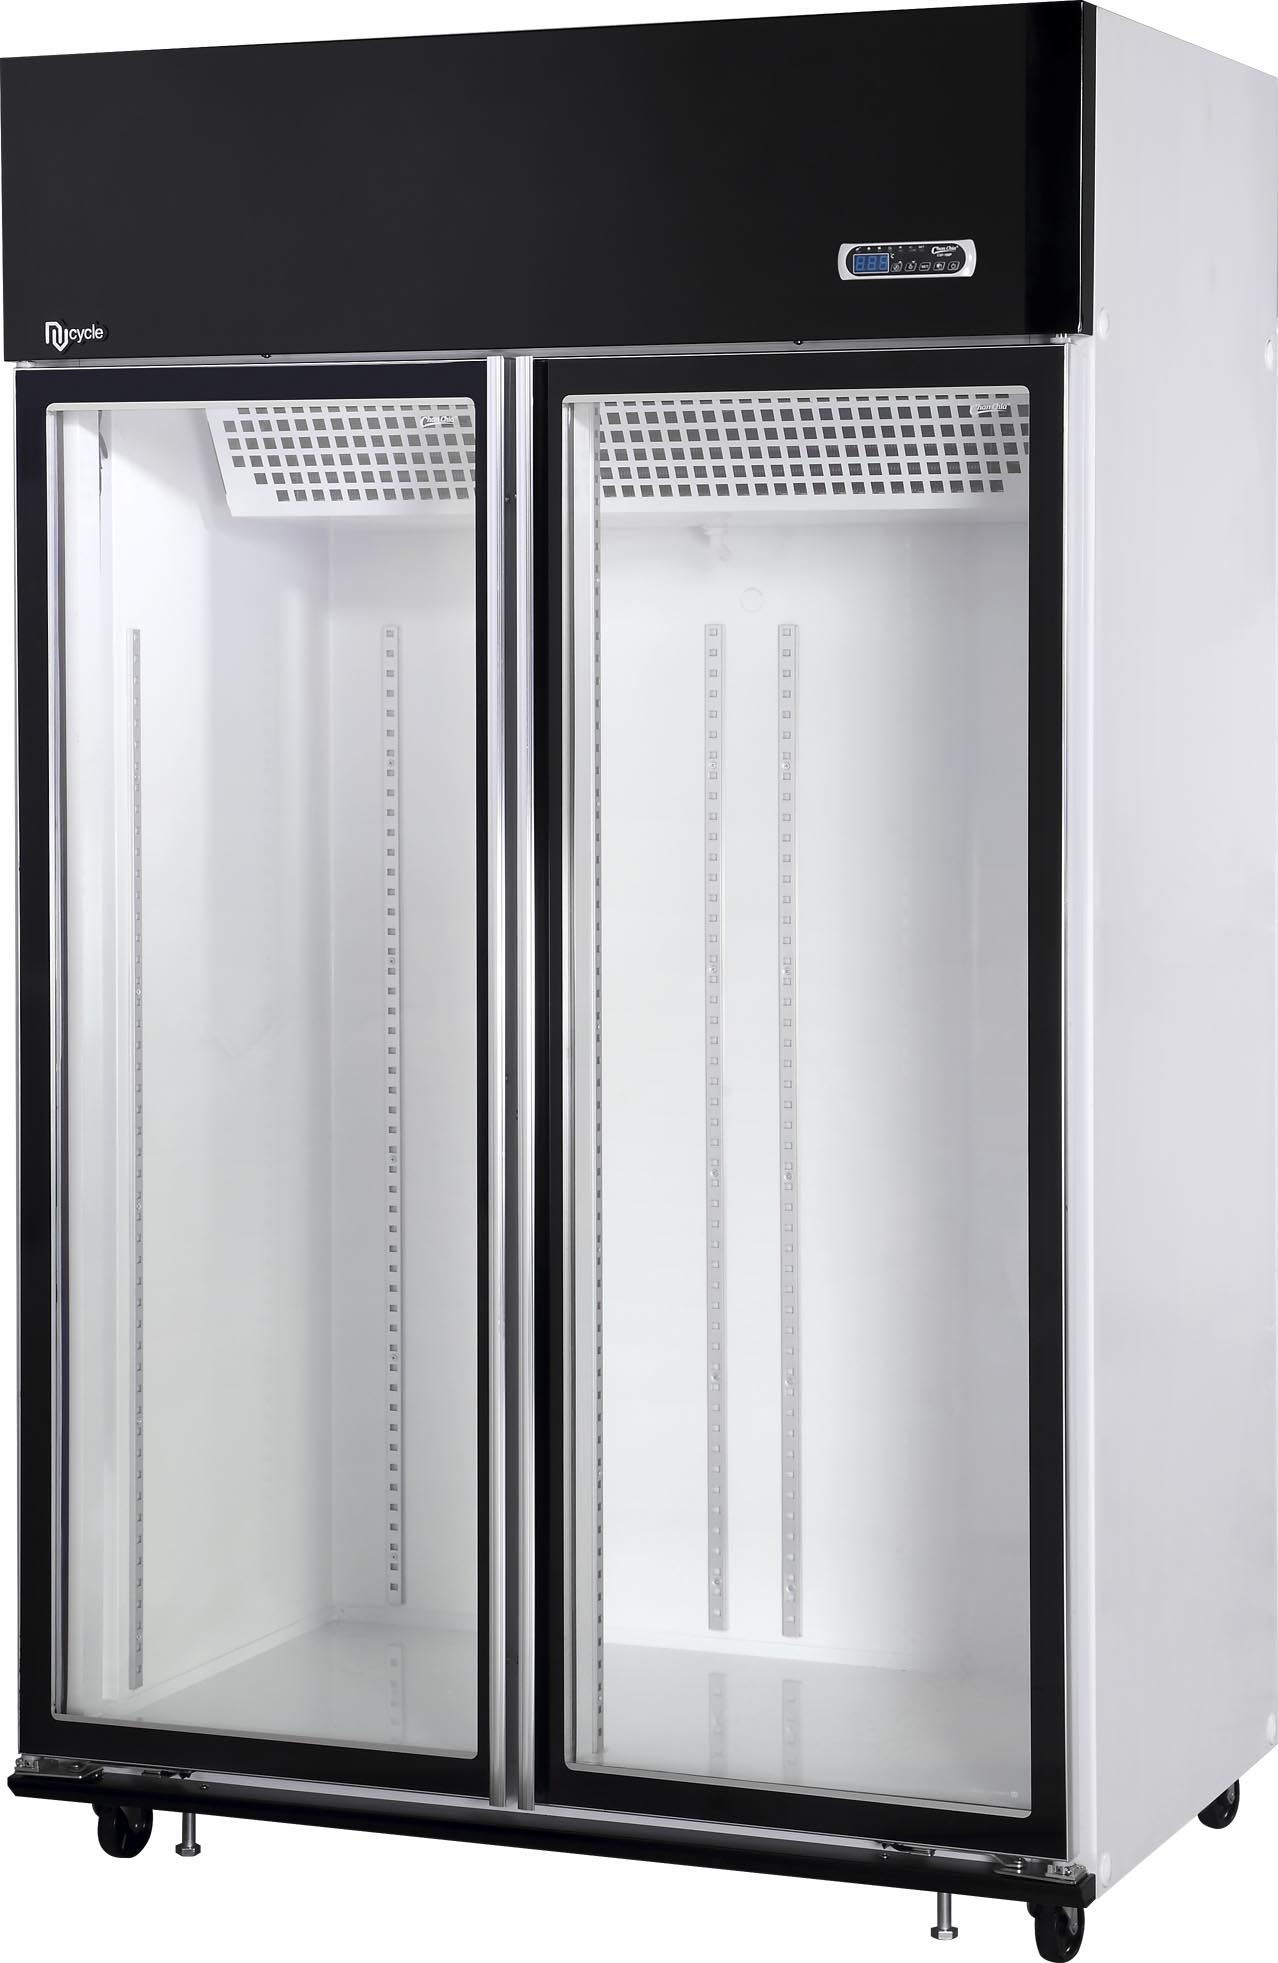 Deluxe Type 2 Glass Door Chillerfreezer Display Cabinet Reach intended for proportions 1278 X 1963